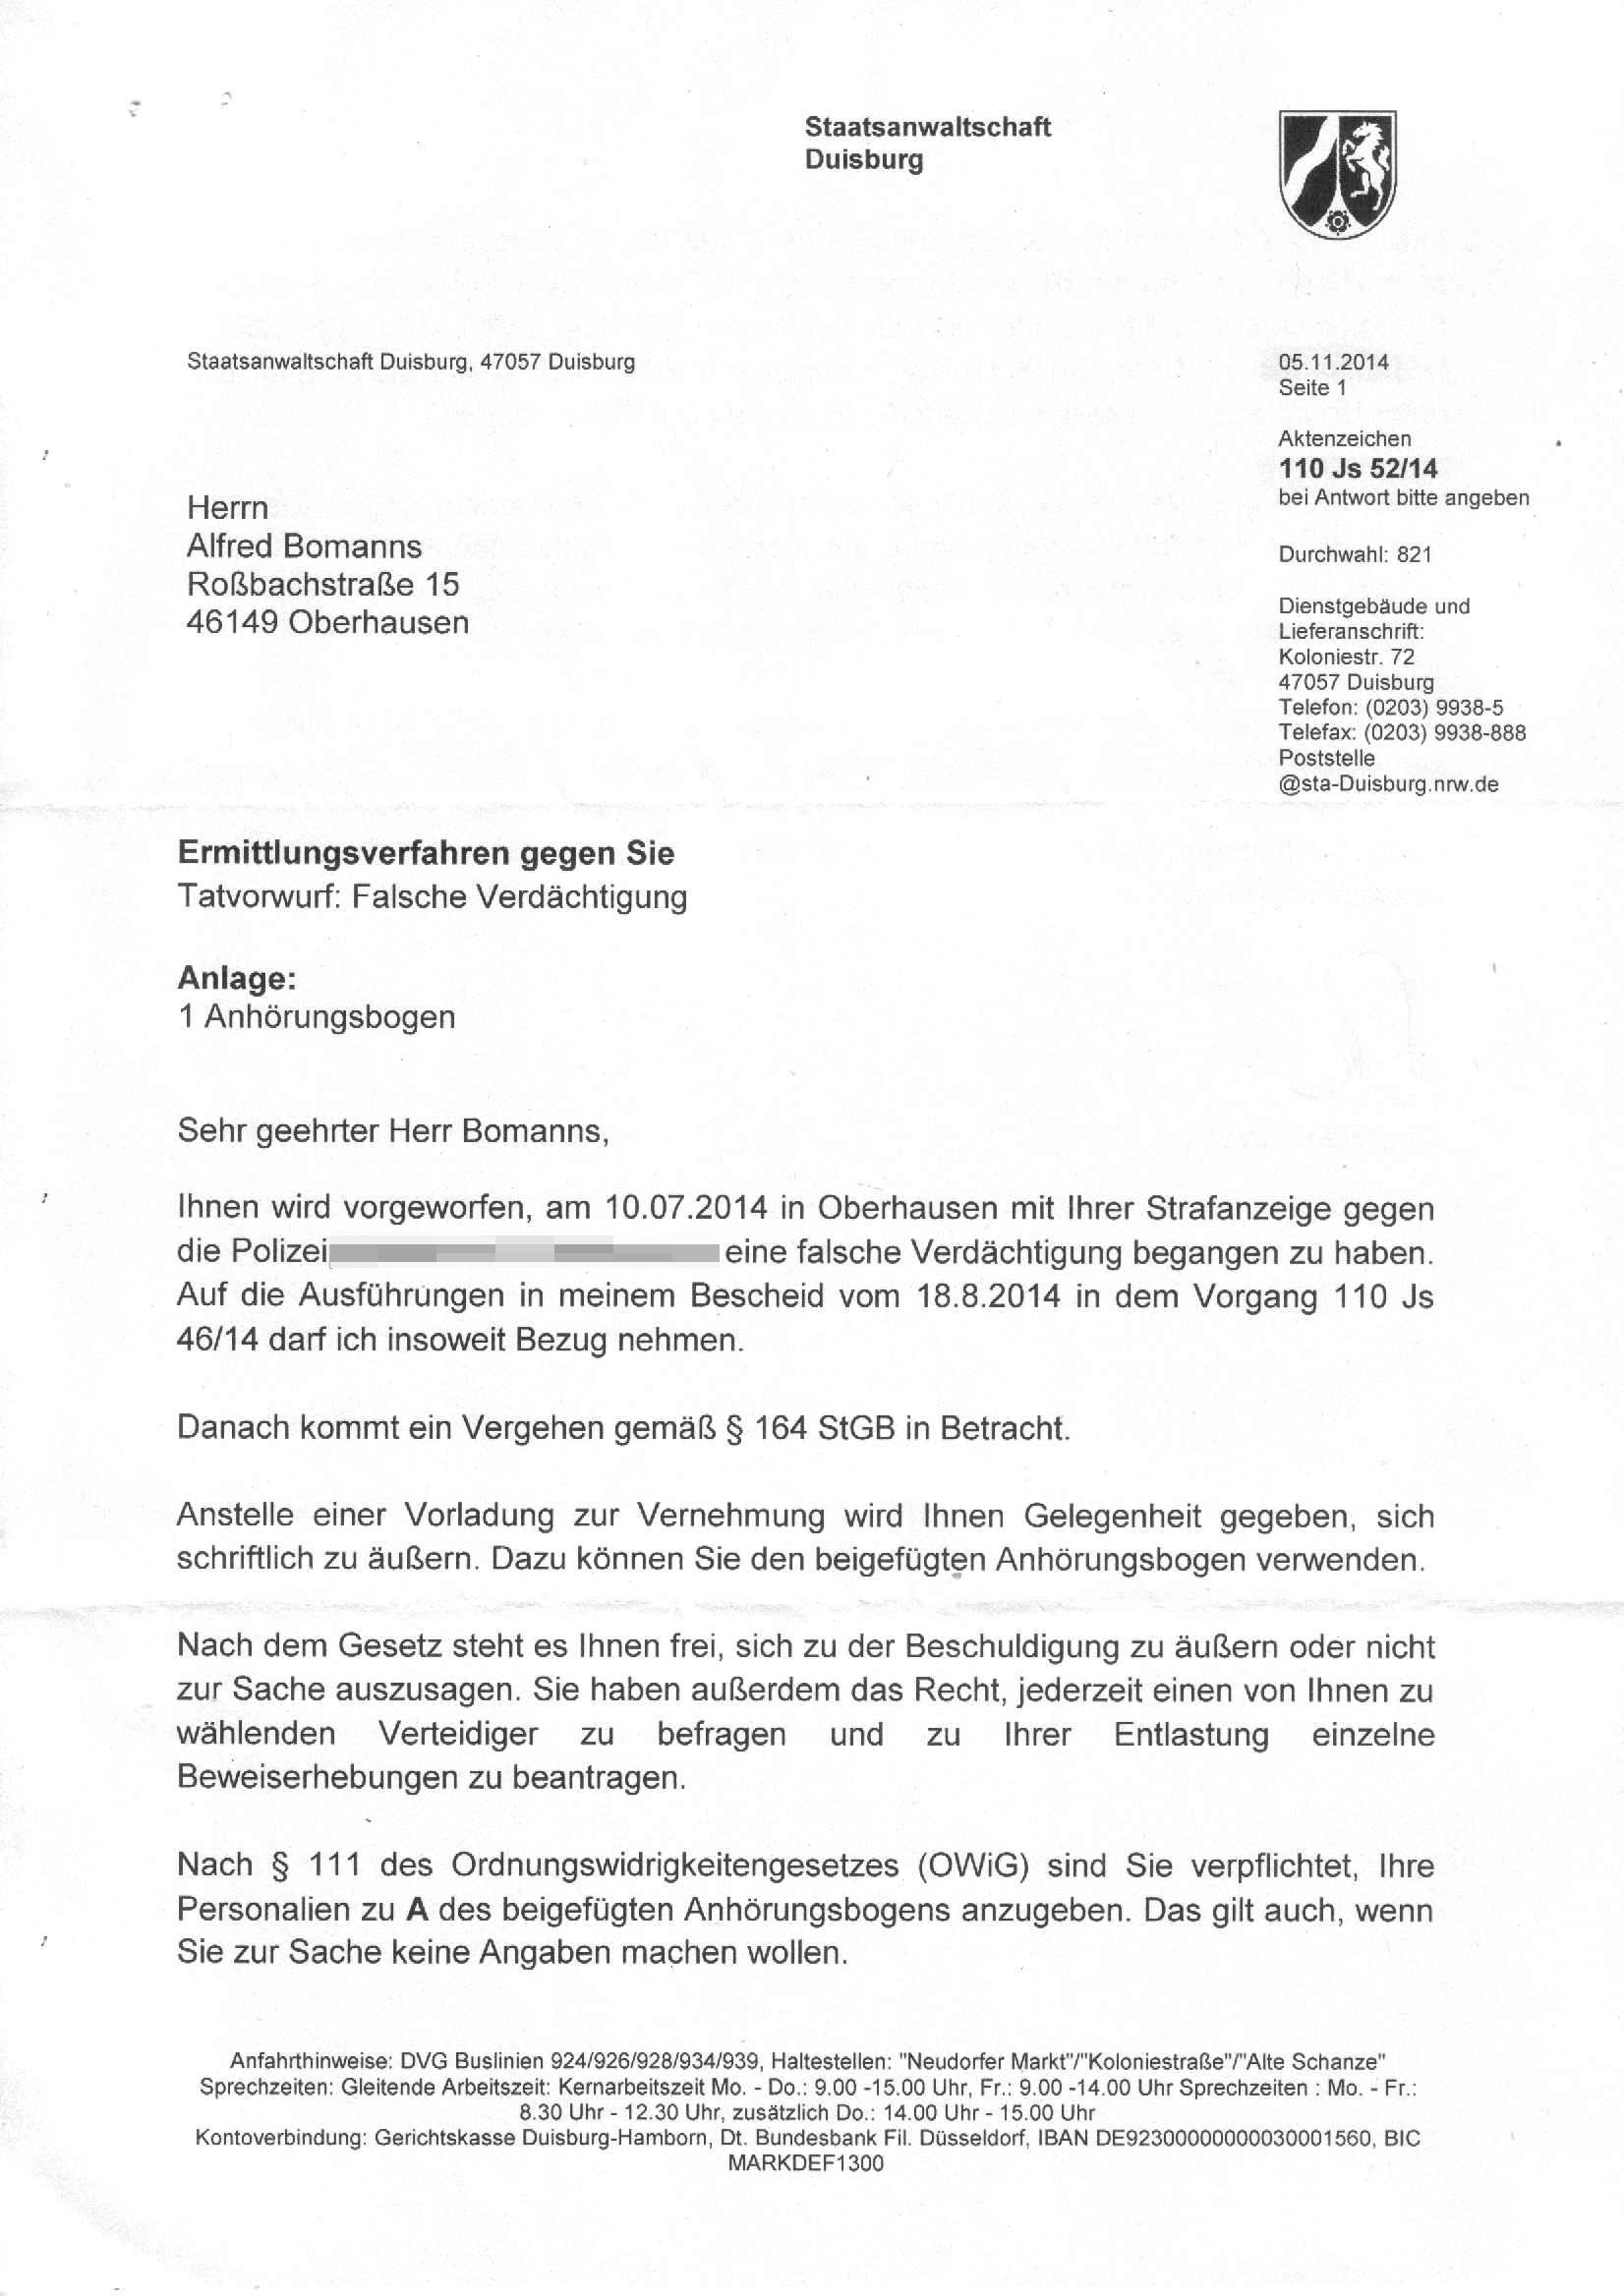 Bescheid der Staatsanwaltschaft Duisburg, Oberstaatsanwalt Wolfgang Seither, vom 05.11.2014, S. 1